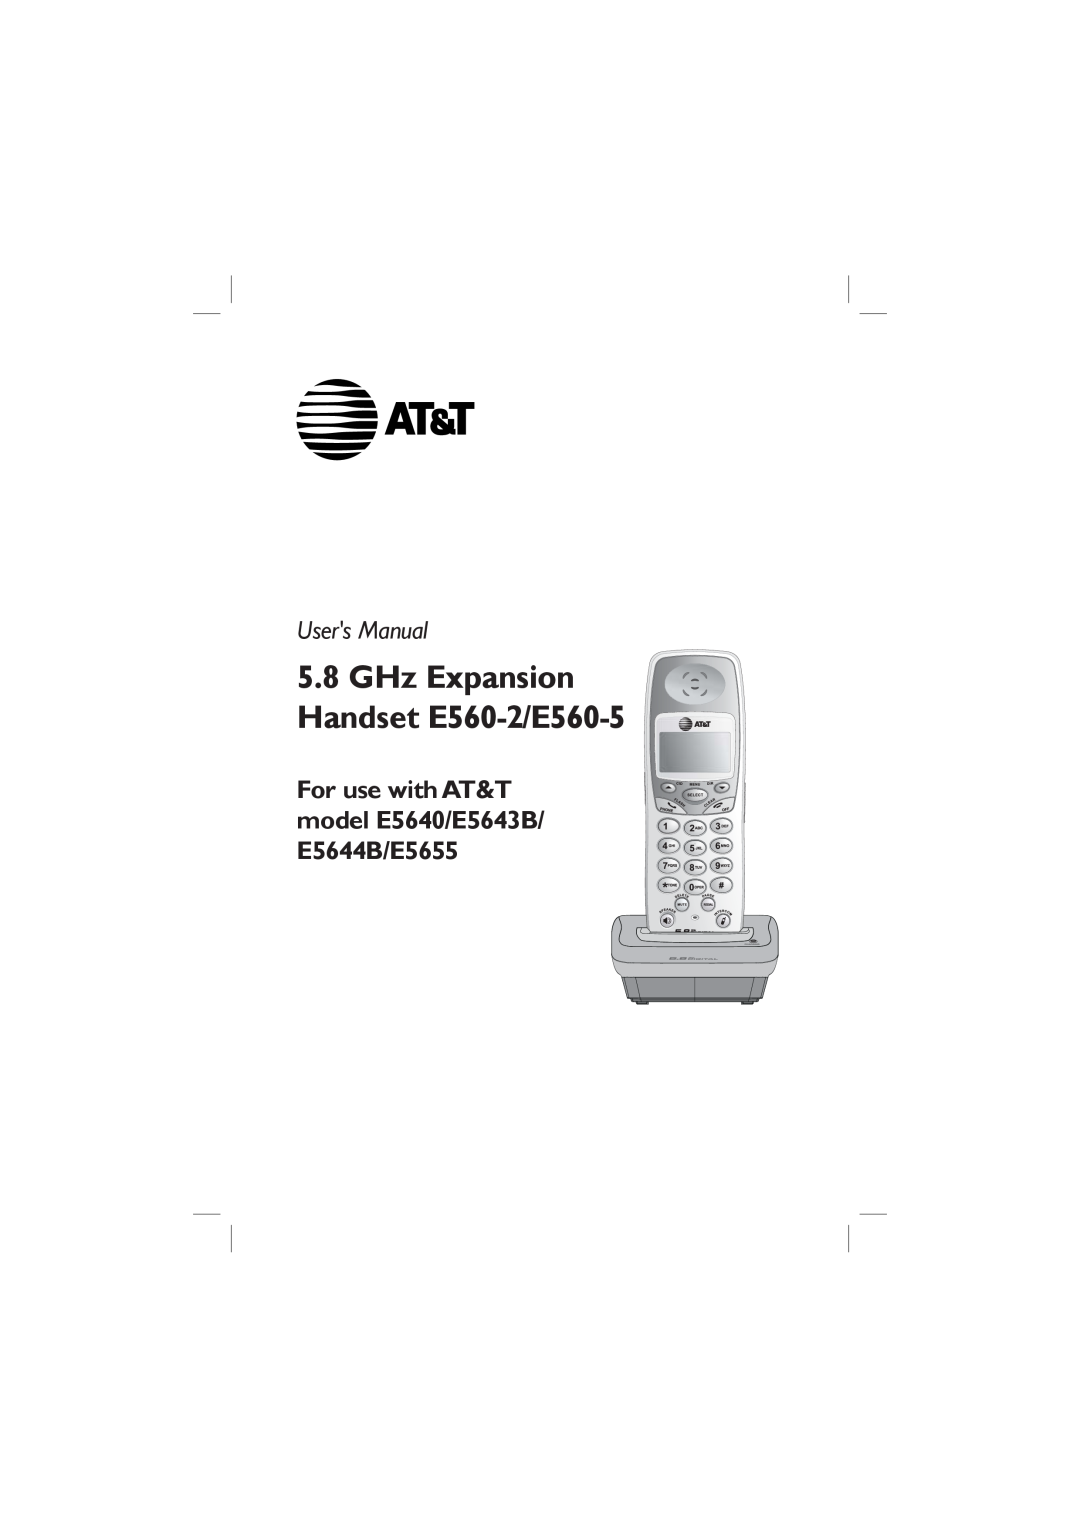 AT&T user manual For use with AT&T model E5640/E5643B/ E5644B/E5655, GHz Expansion Handset E560-2/E560-5, Users Manual 